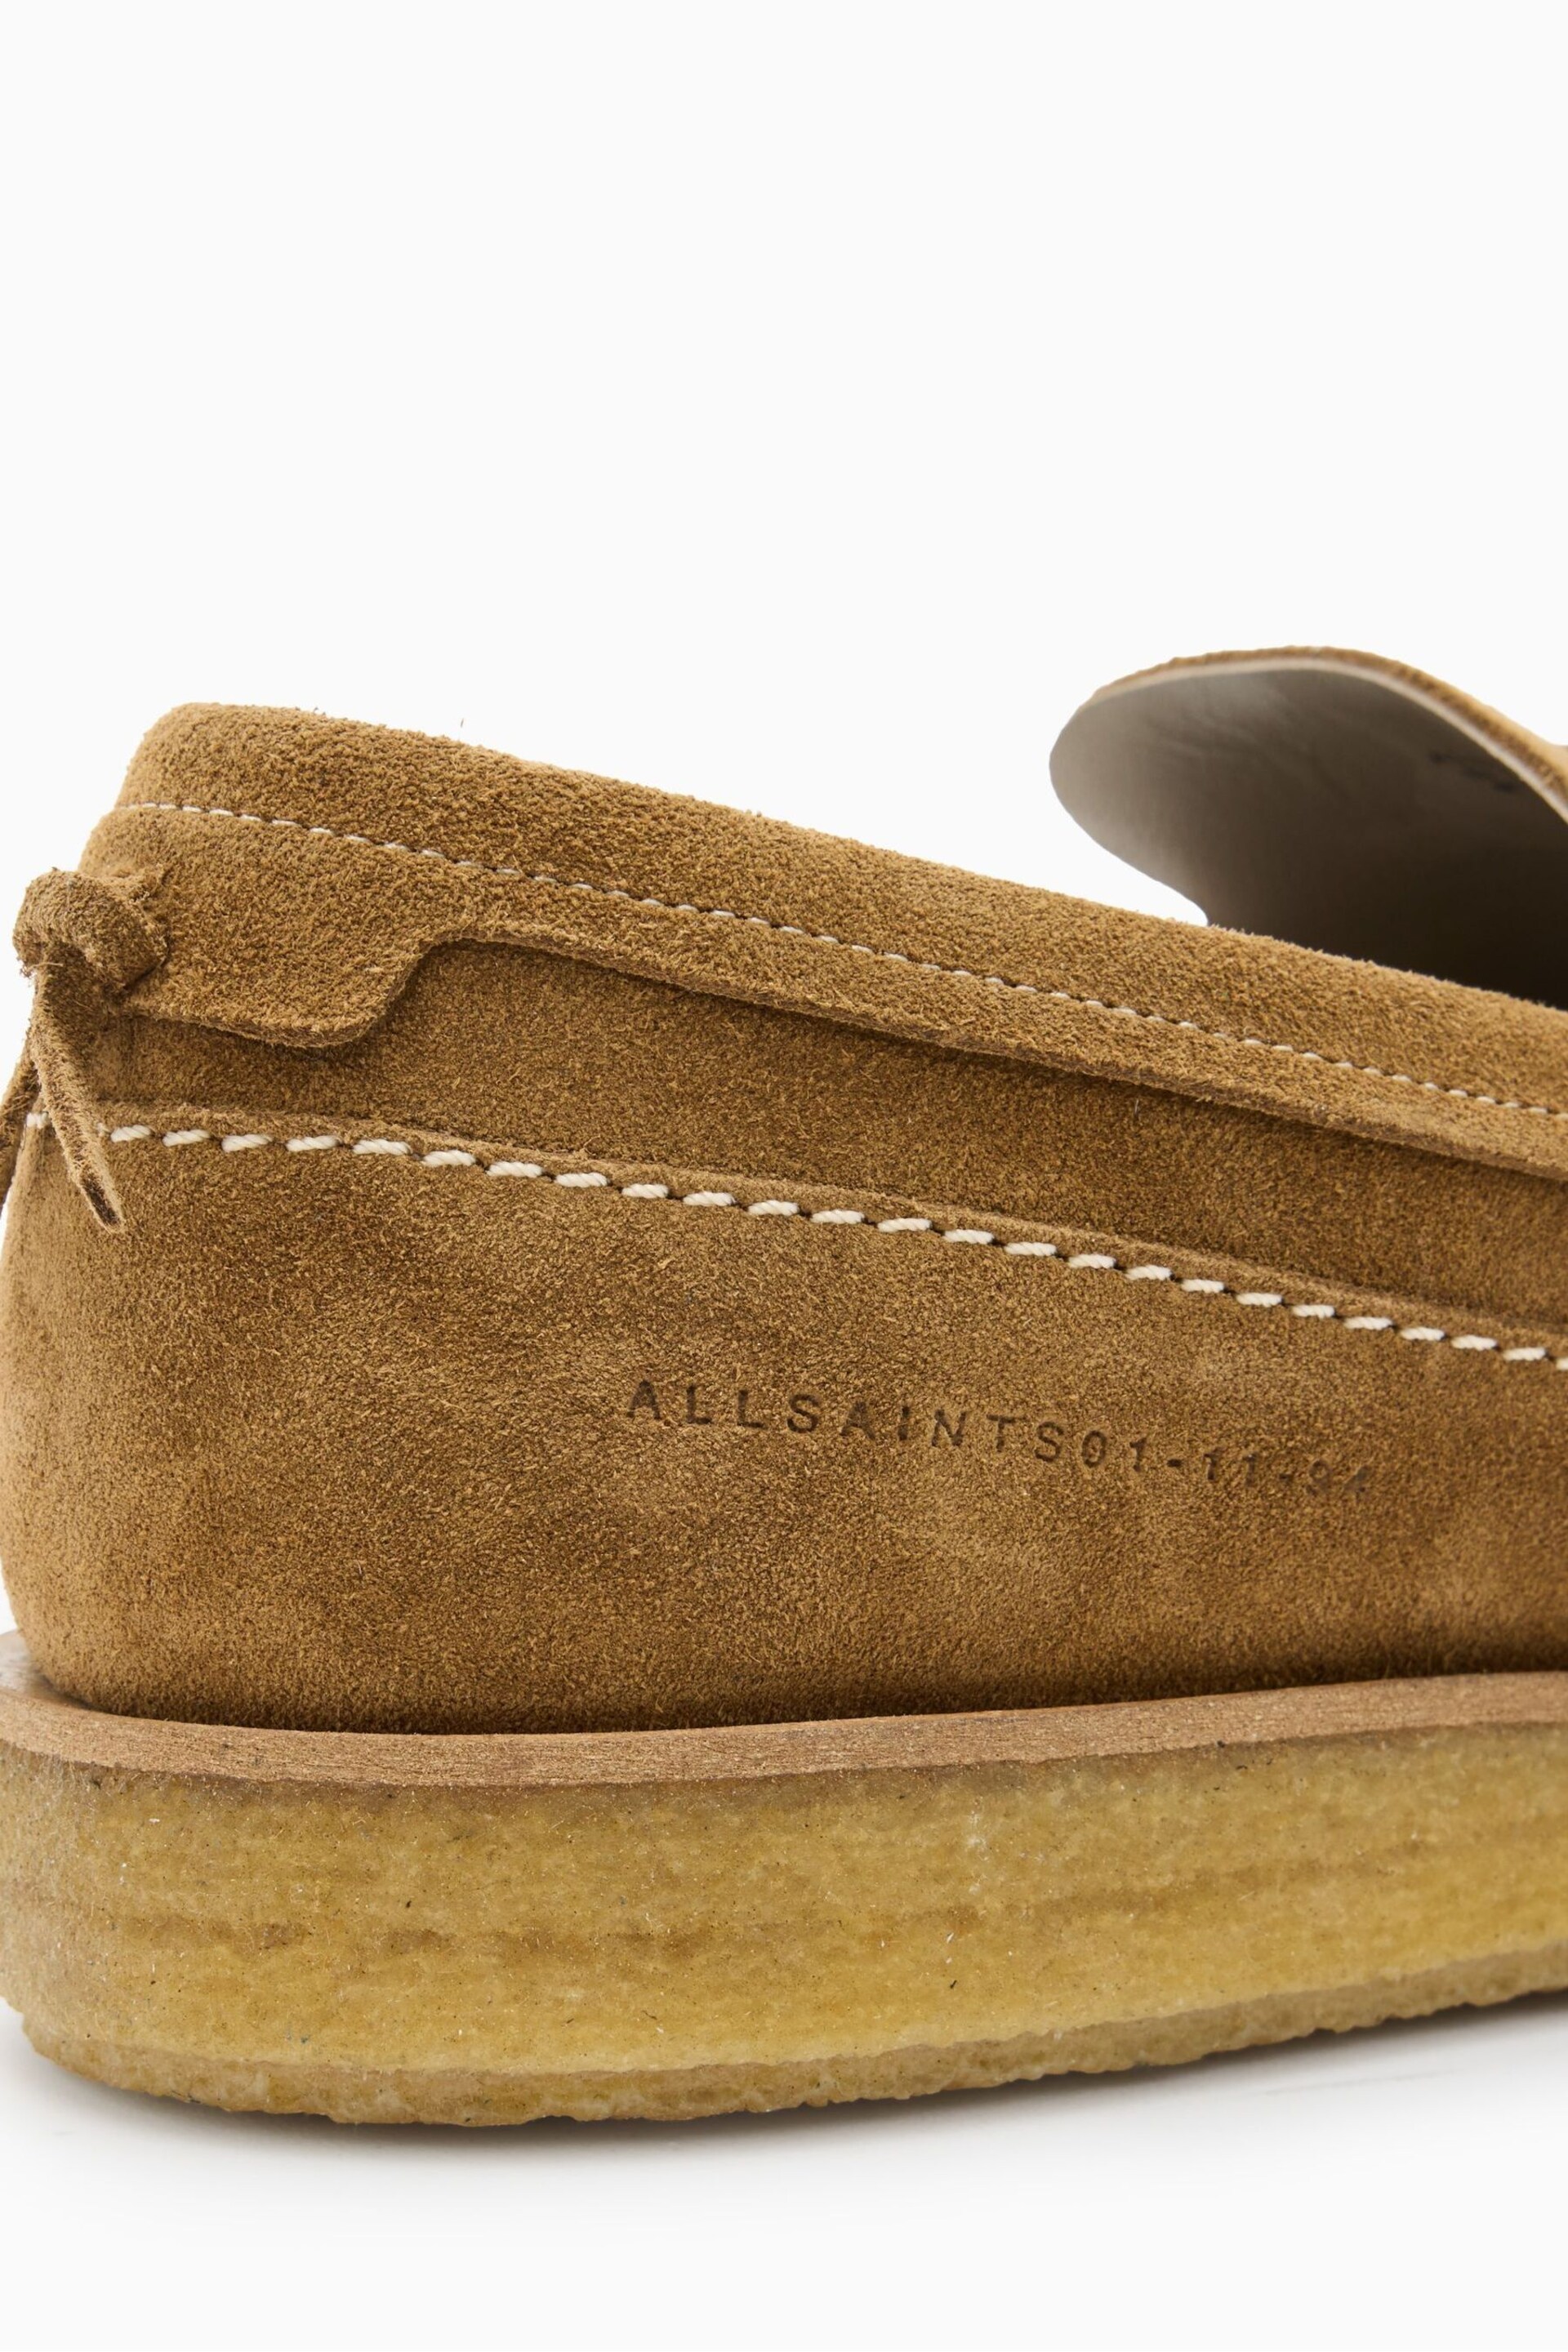 AllSaints Natural Jago Loafers - Image 5 of 5